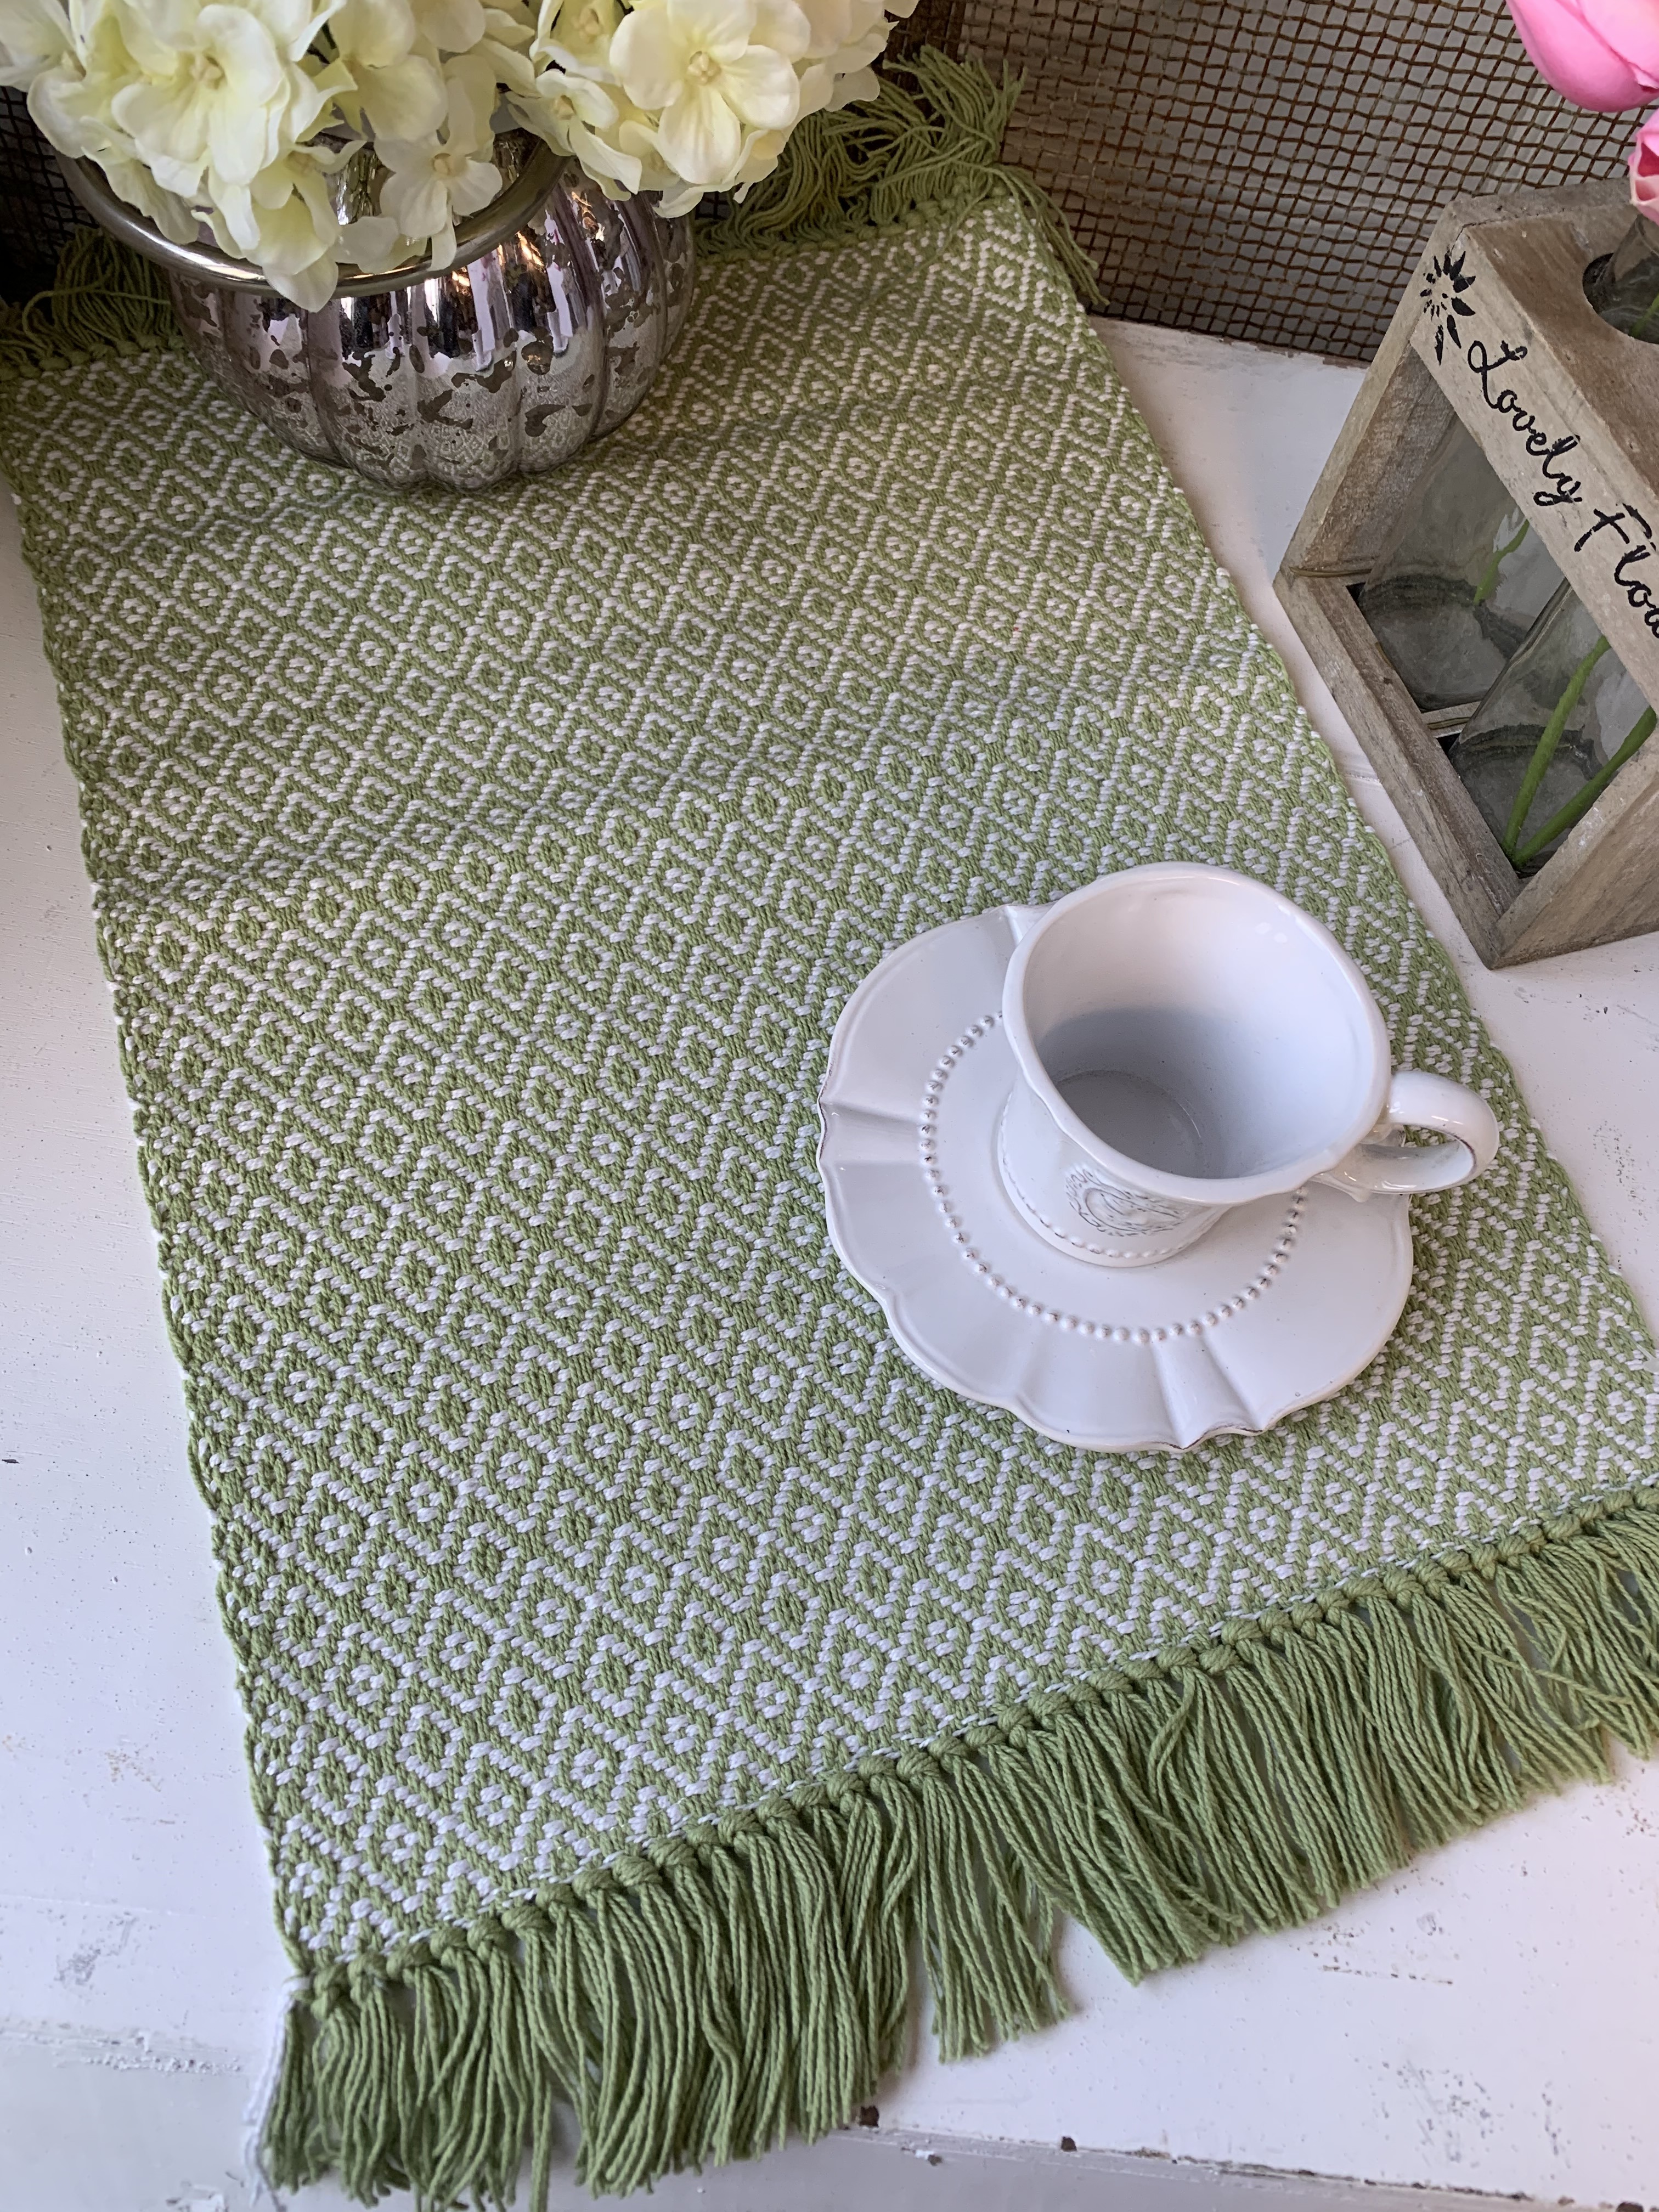 Grün cm Platzsets | | Baumwolle Fransen KARA Textilien 2 x 33 Tischset Platzset | 45 Stück lillabelle